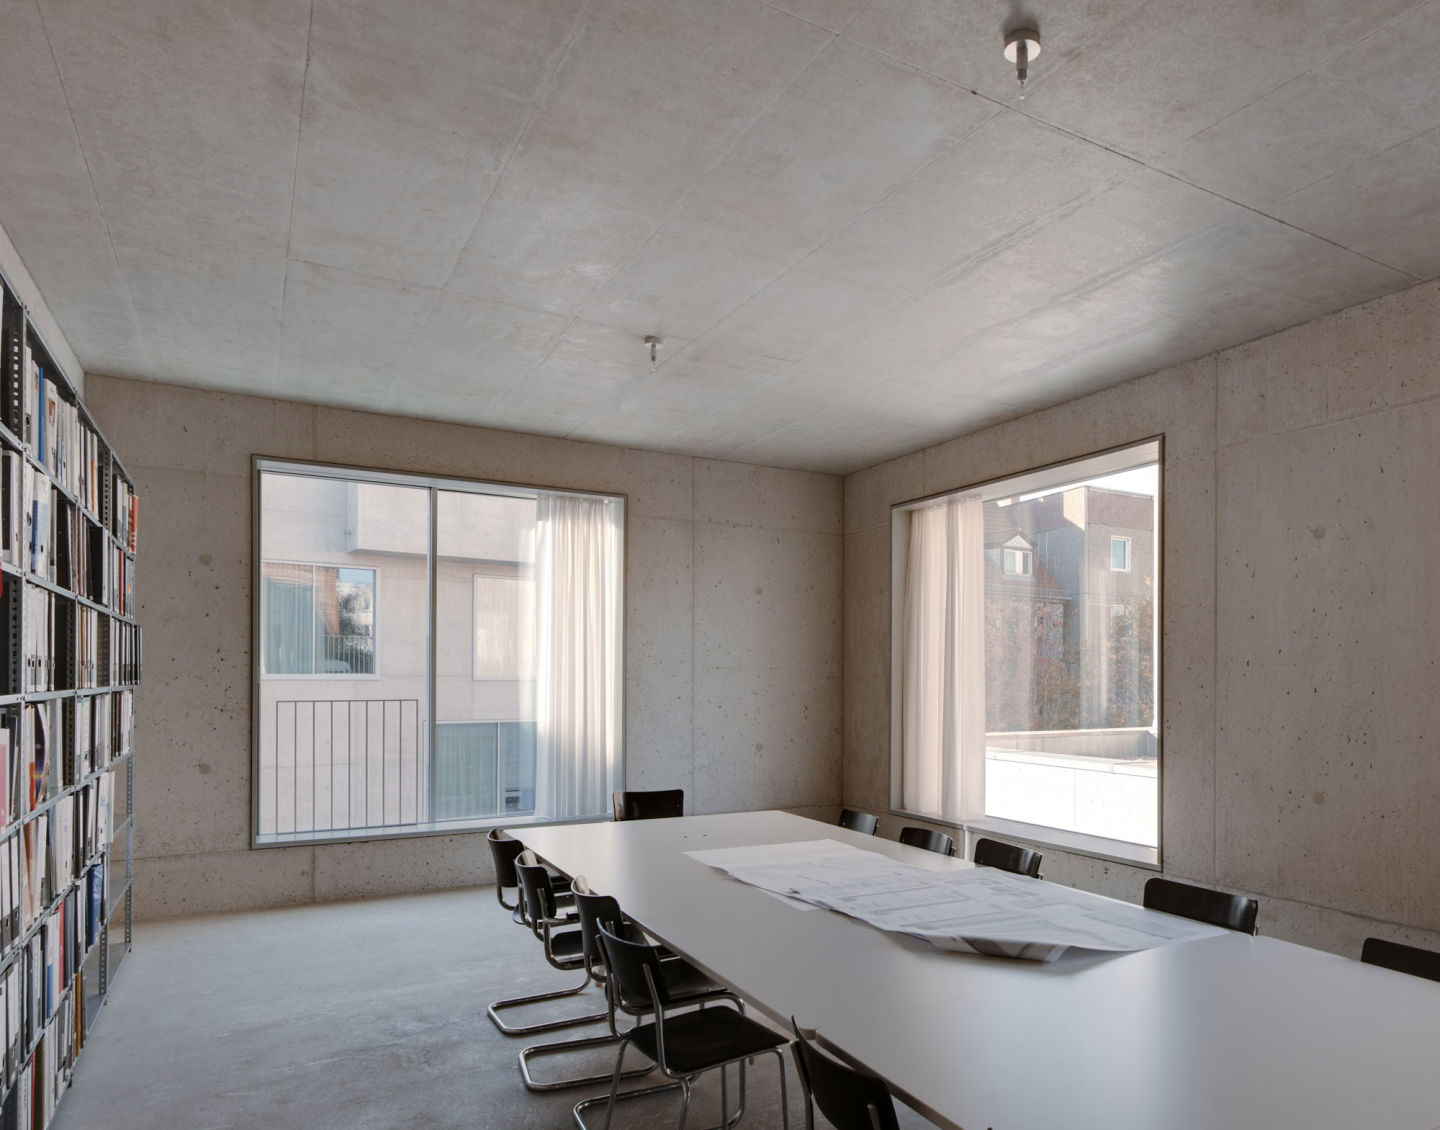 David Chipperfield Architects‘ office in Berlin